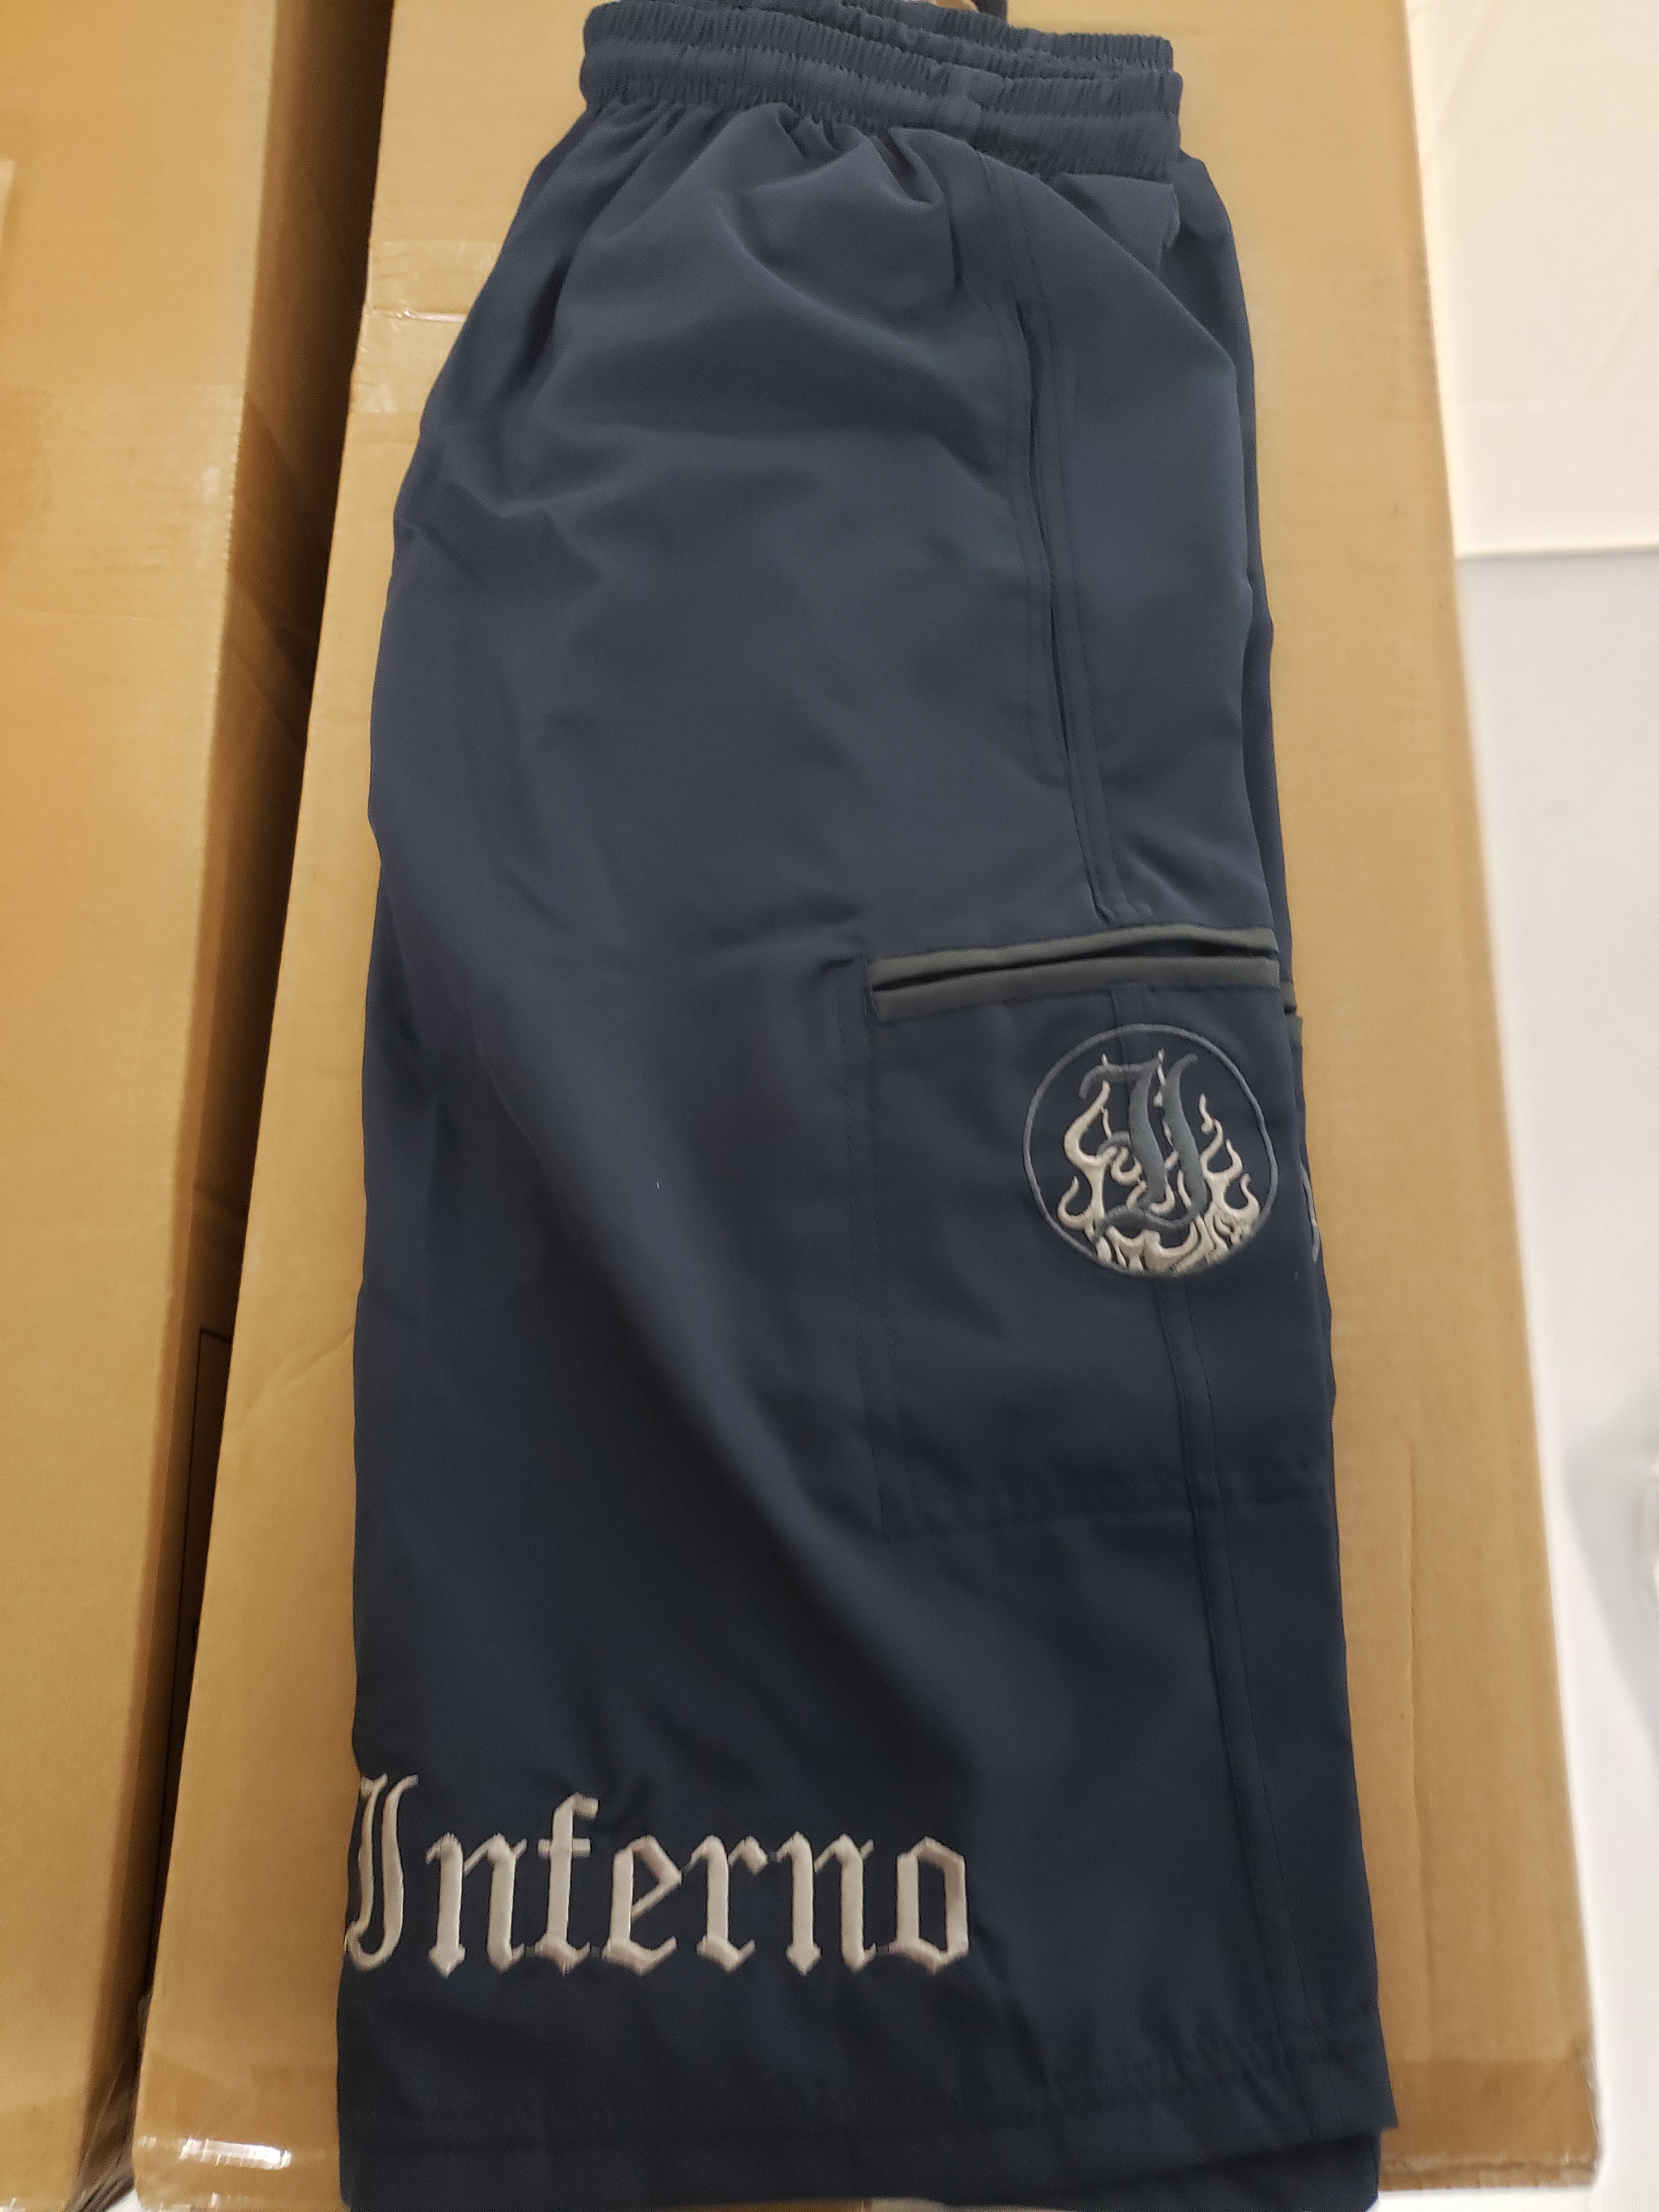 Inferno Semi Sub Short Sleeve Shirt - Inferno Sports and Athletics